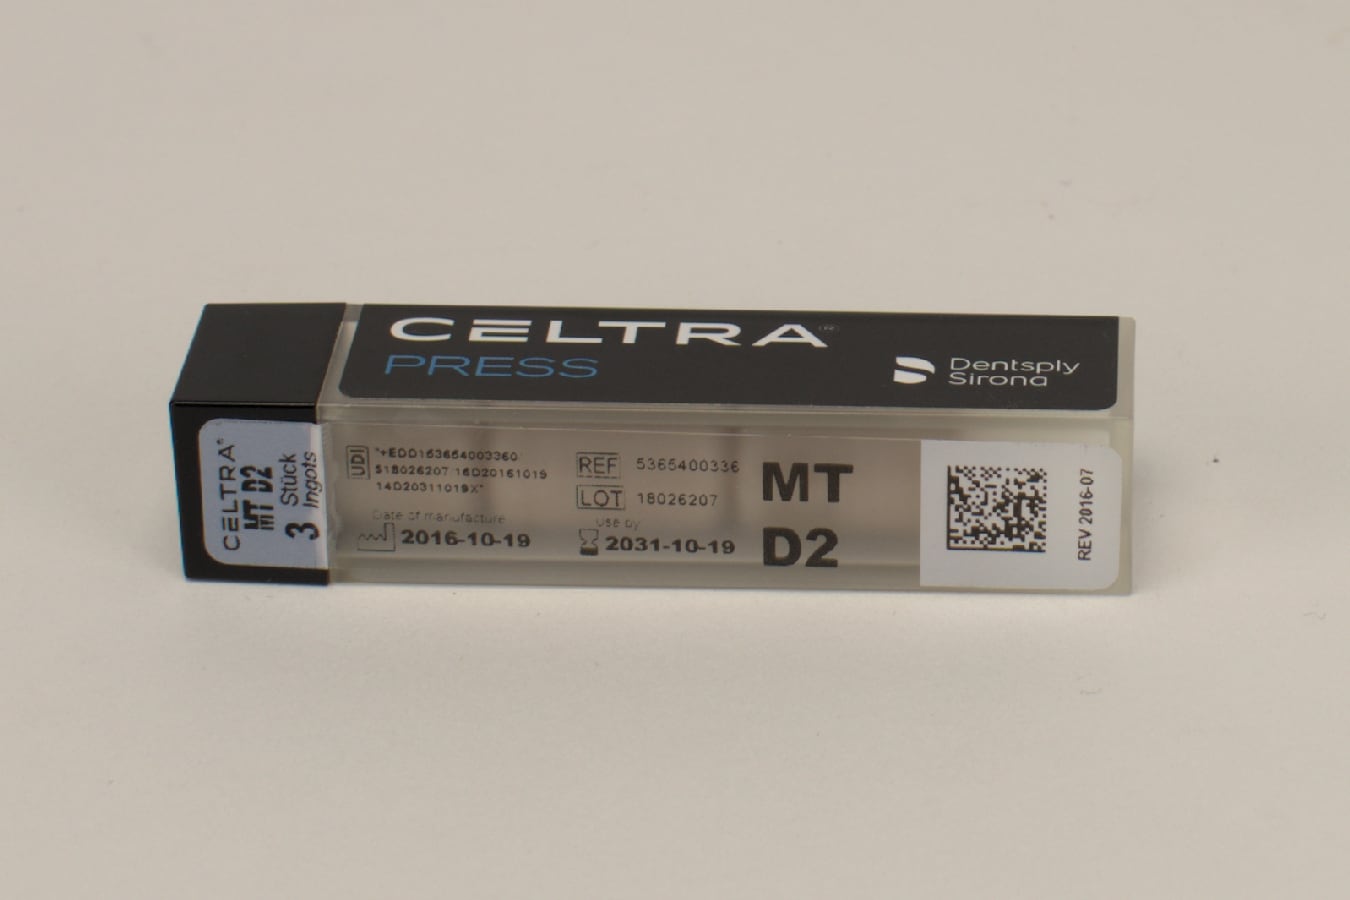 CELTRA PRESS MT D2 3x6g 